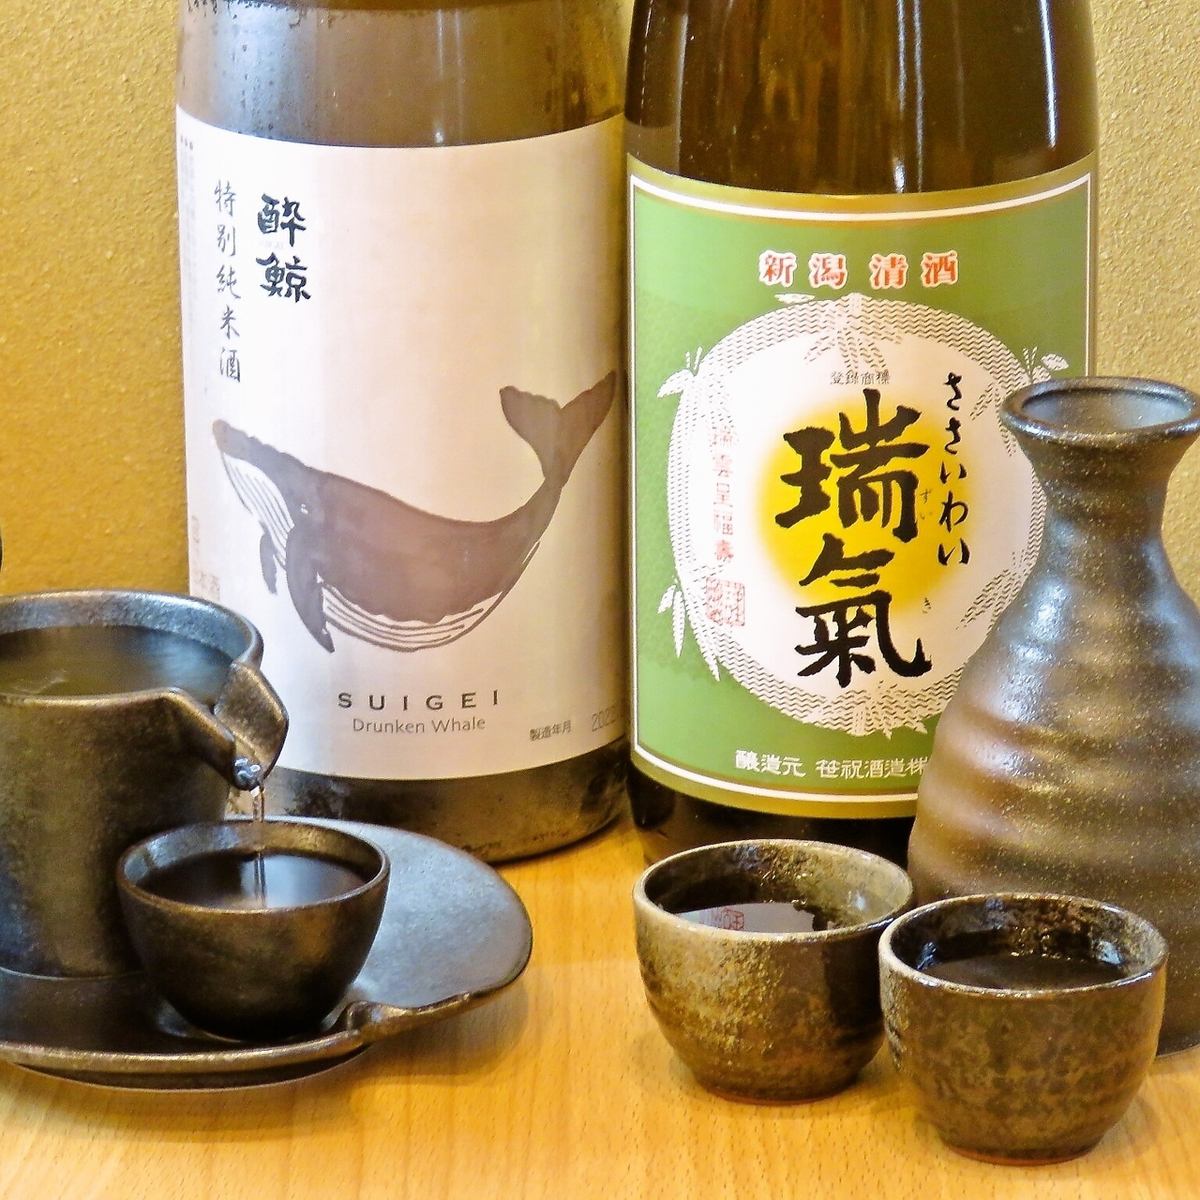 We prepare appetizers that match Japanese sake